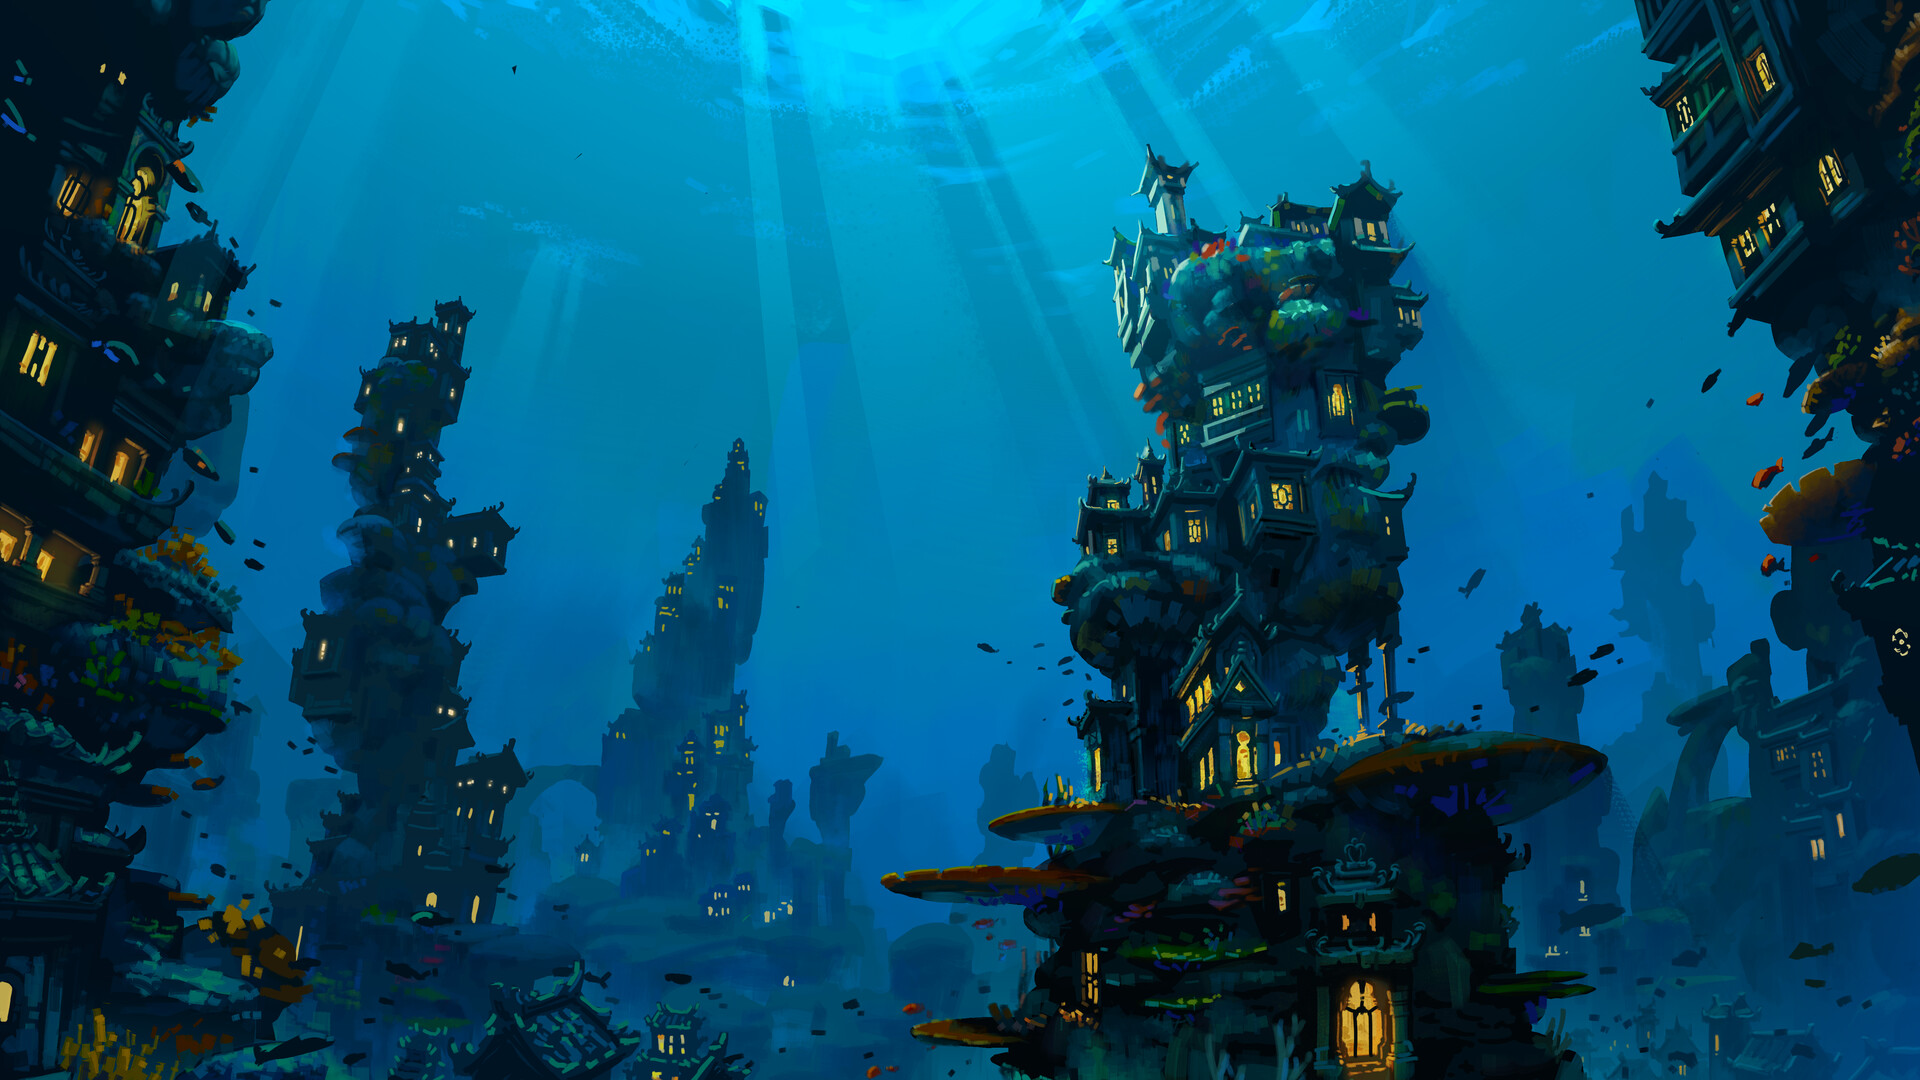 ArtStation Digital Art Illustration Architecture Underwater City Sunken